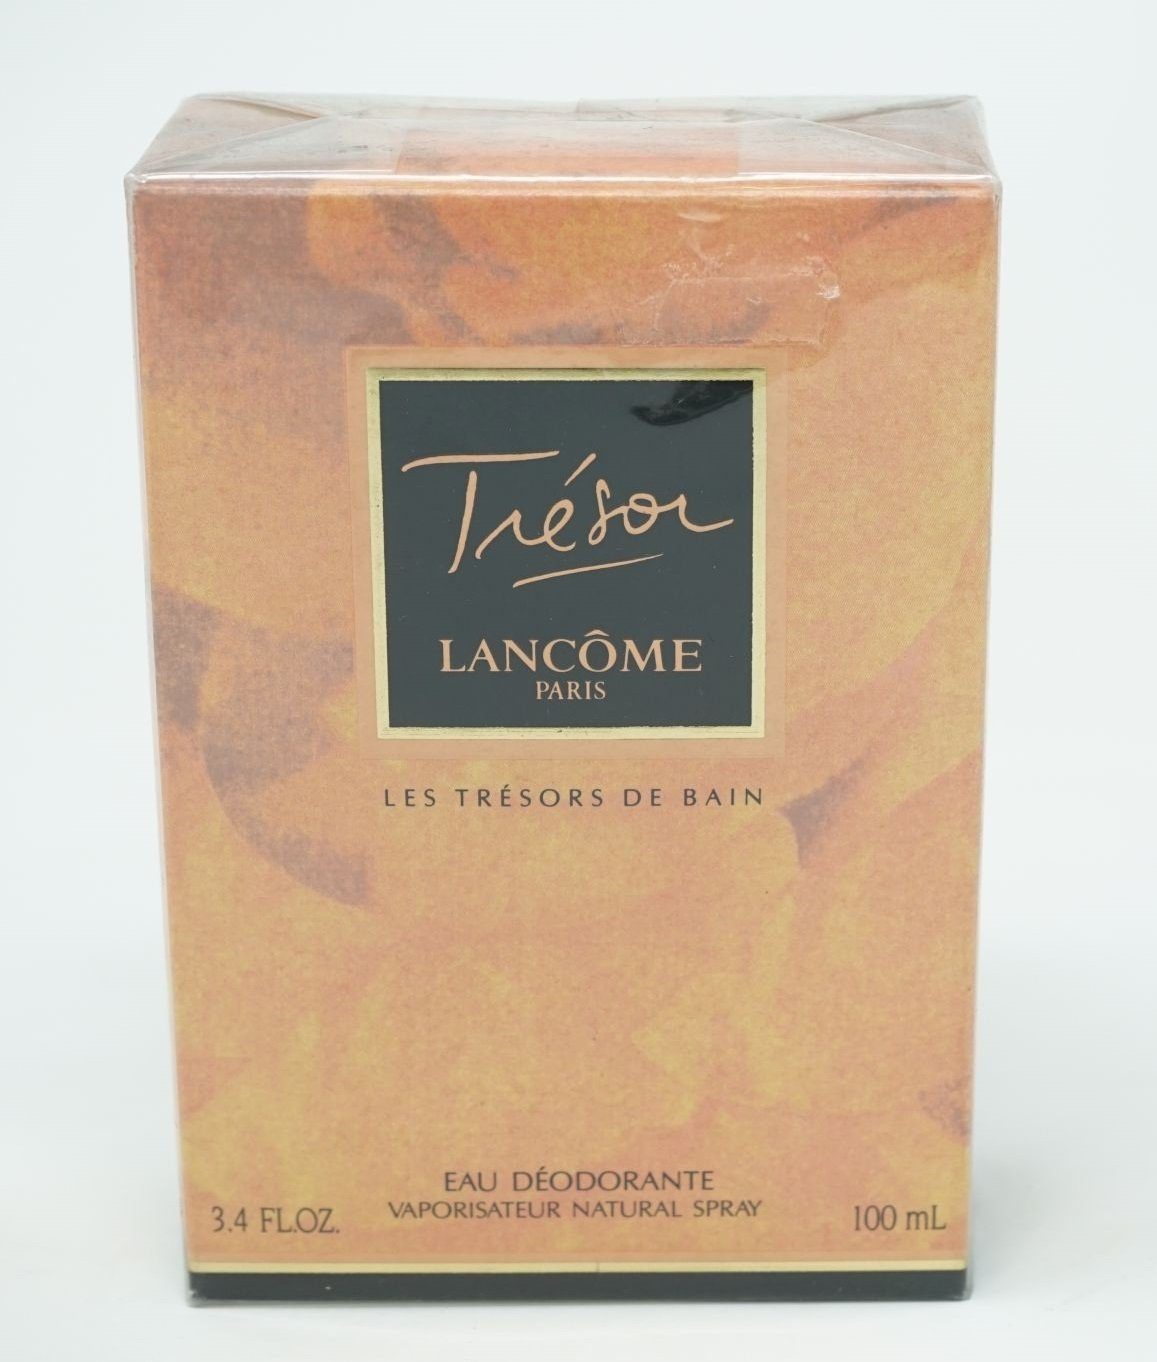 LANCOME Deo-Spray Lancome Trésor Les Tresors De Bain Eau Deodorant Spray 100 ml